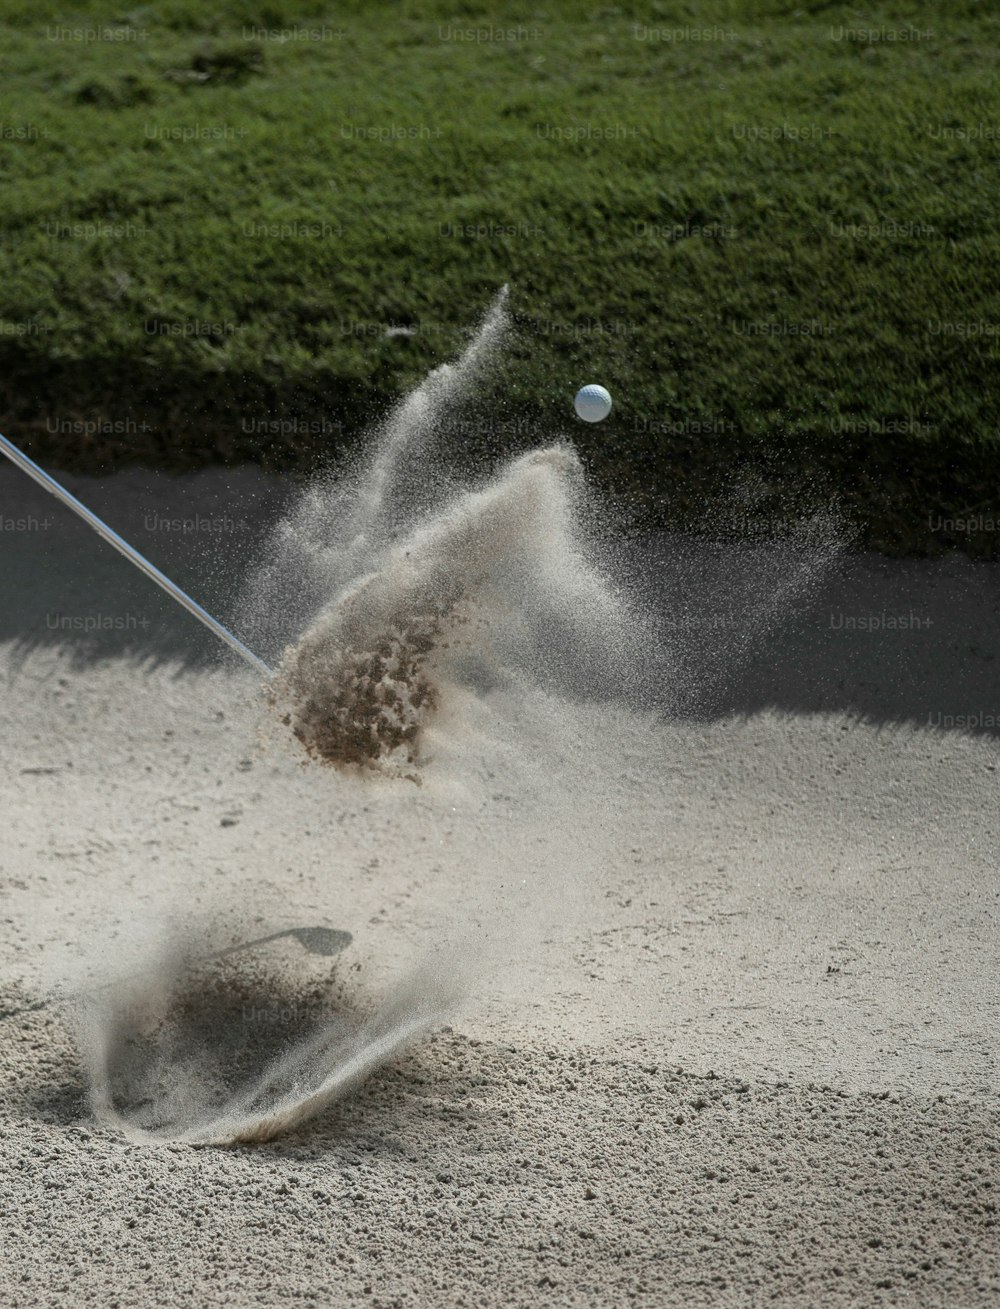 Un hombre golpeando una pelota de golf con un palo de golf